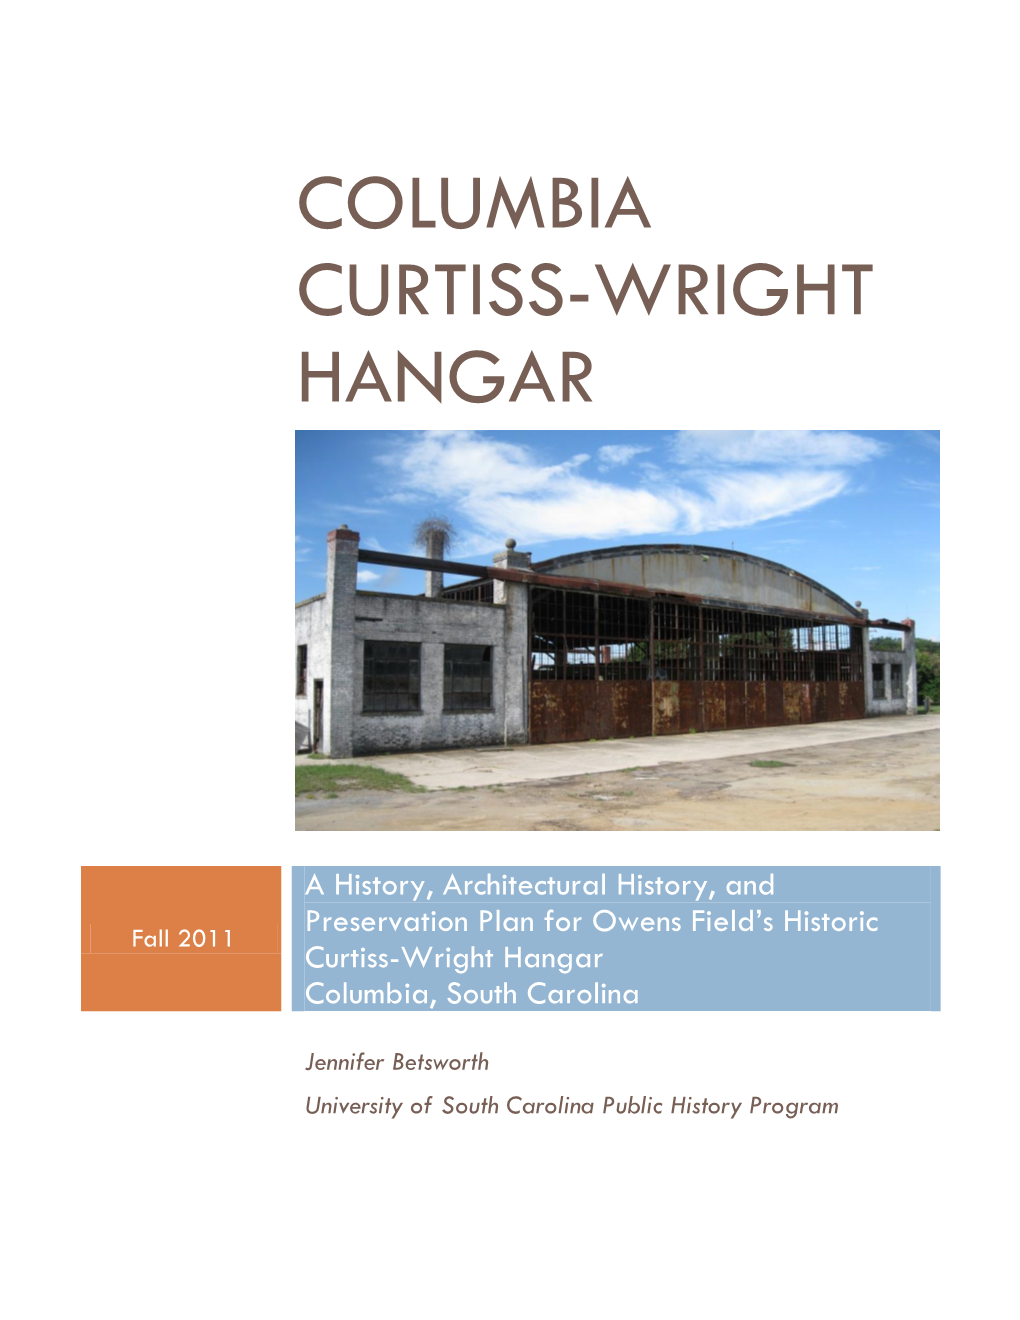 Columbia Curtiss-Wright Hangar